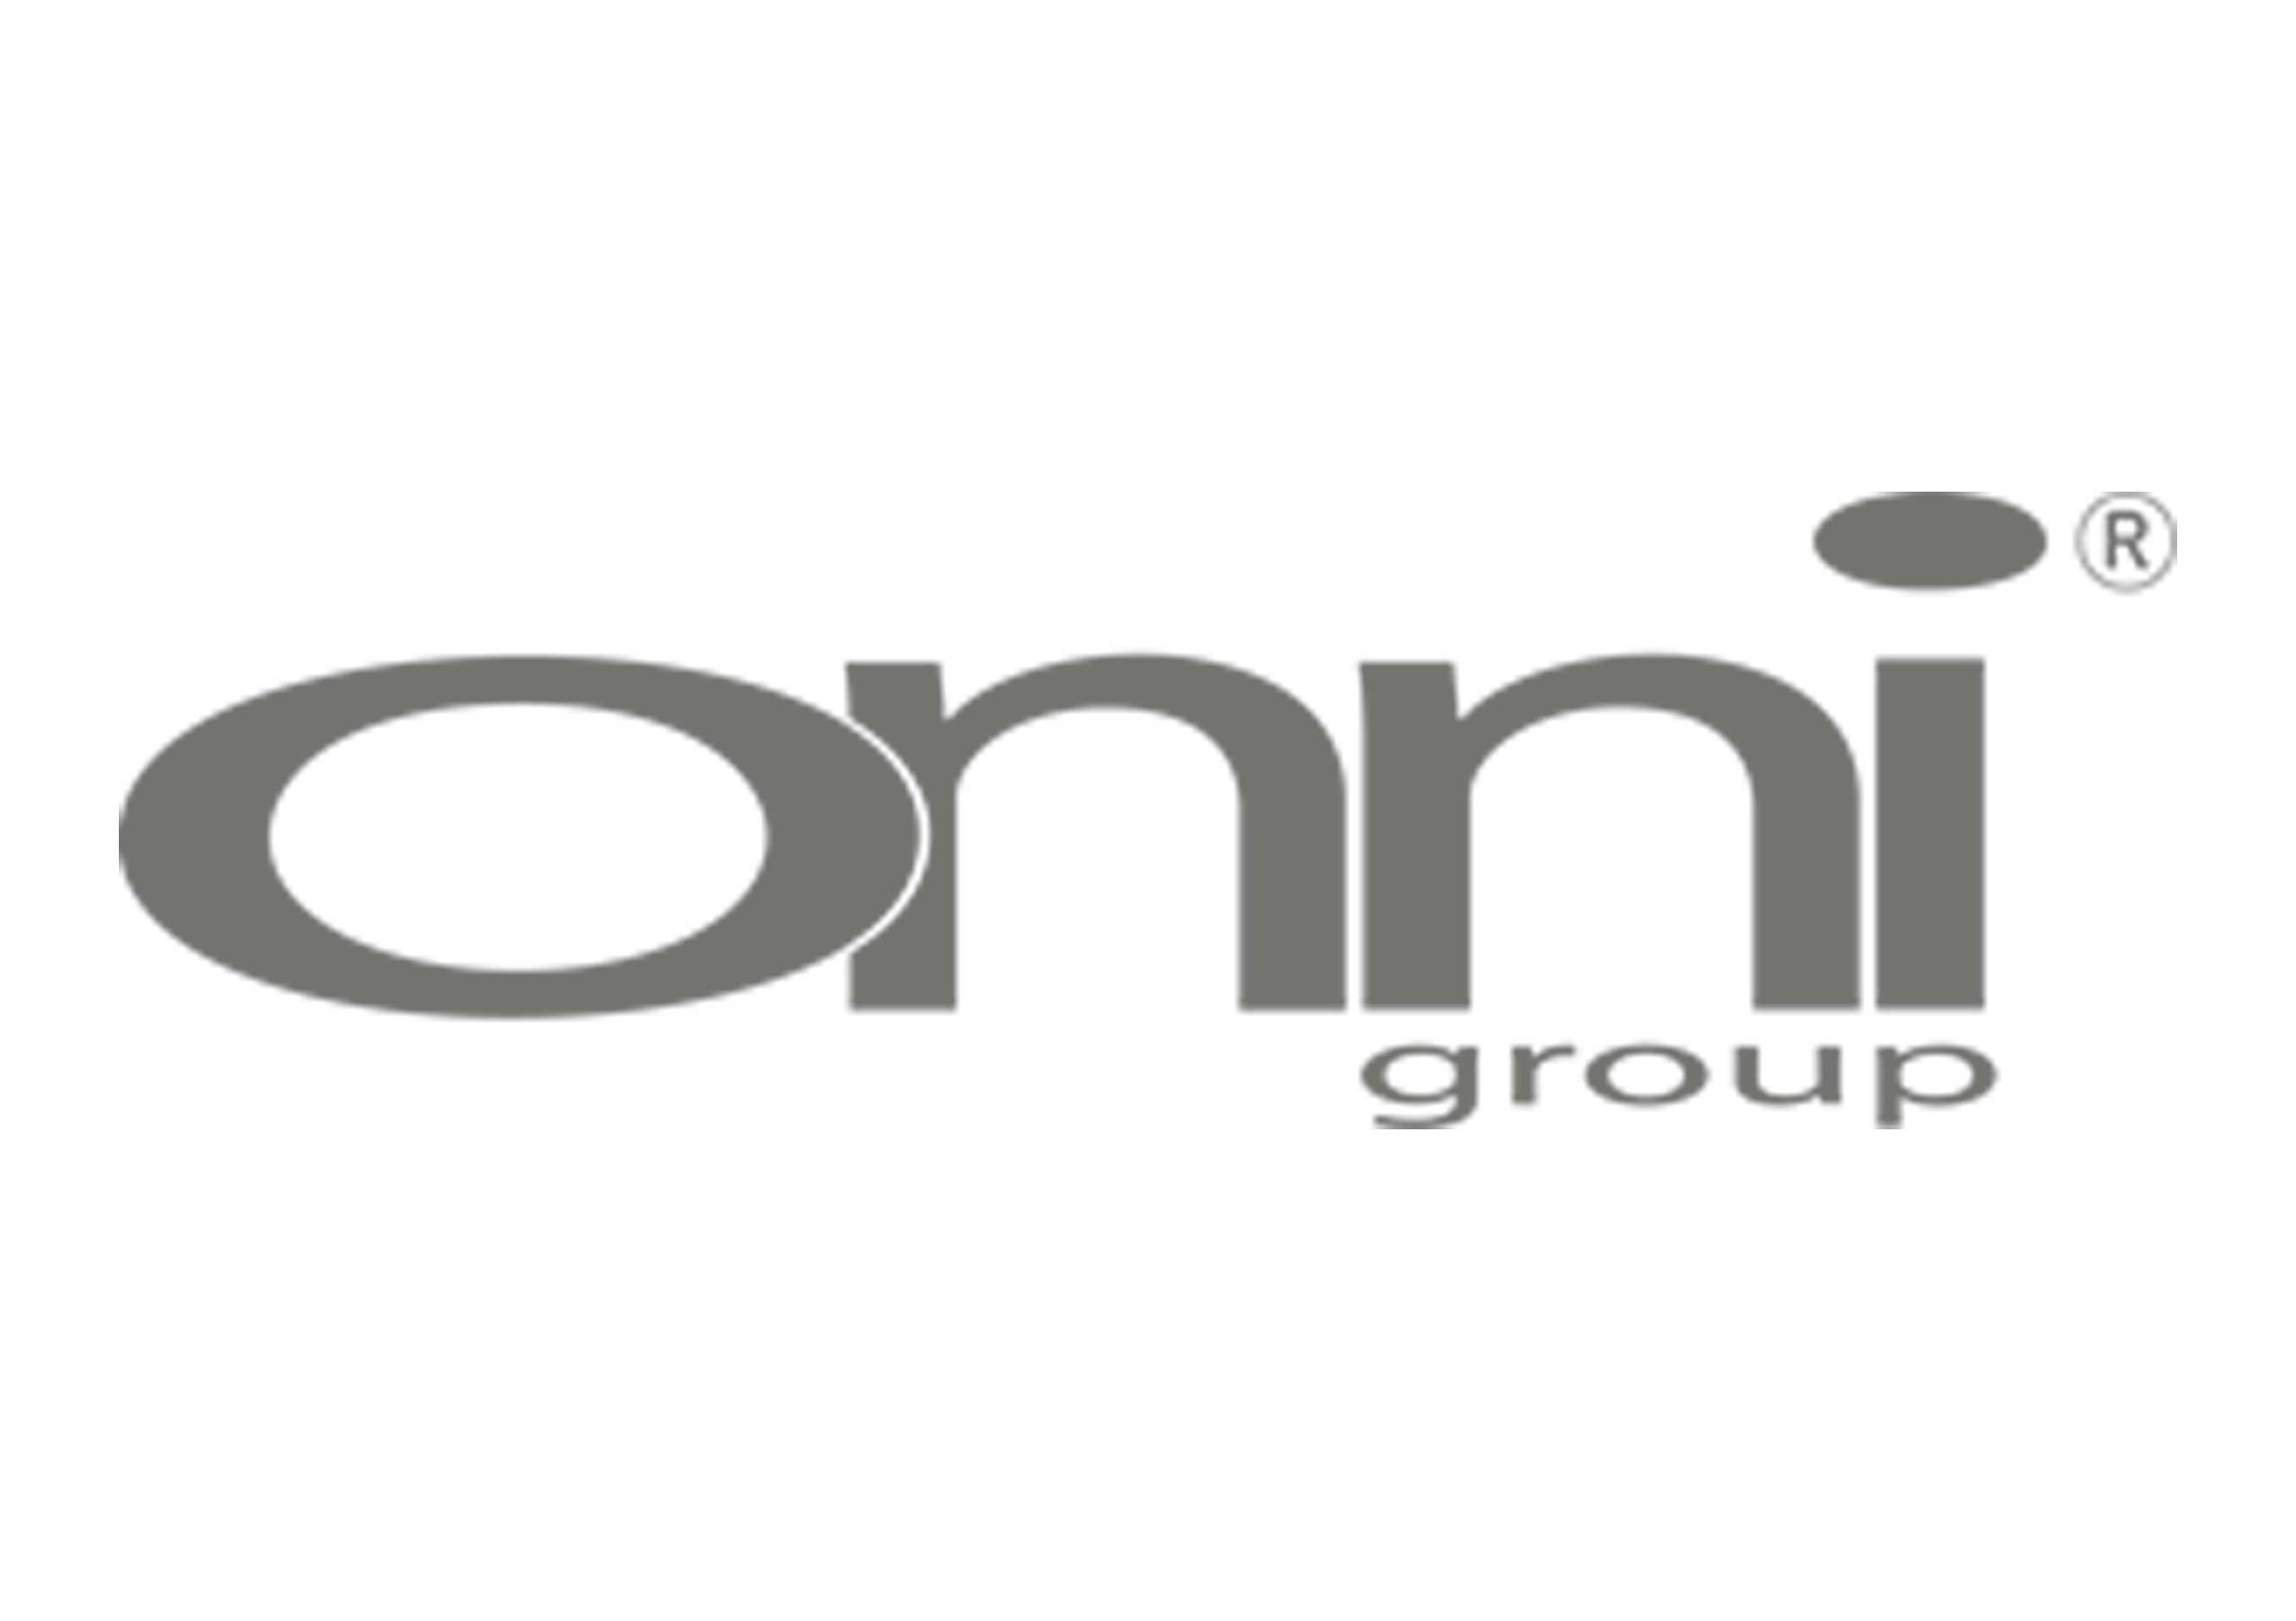 onni-logo